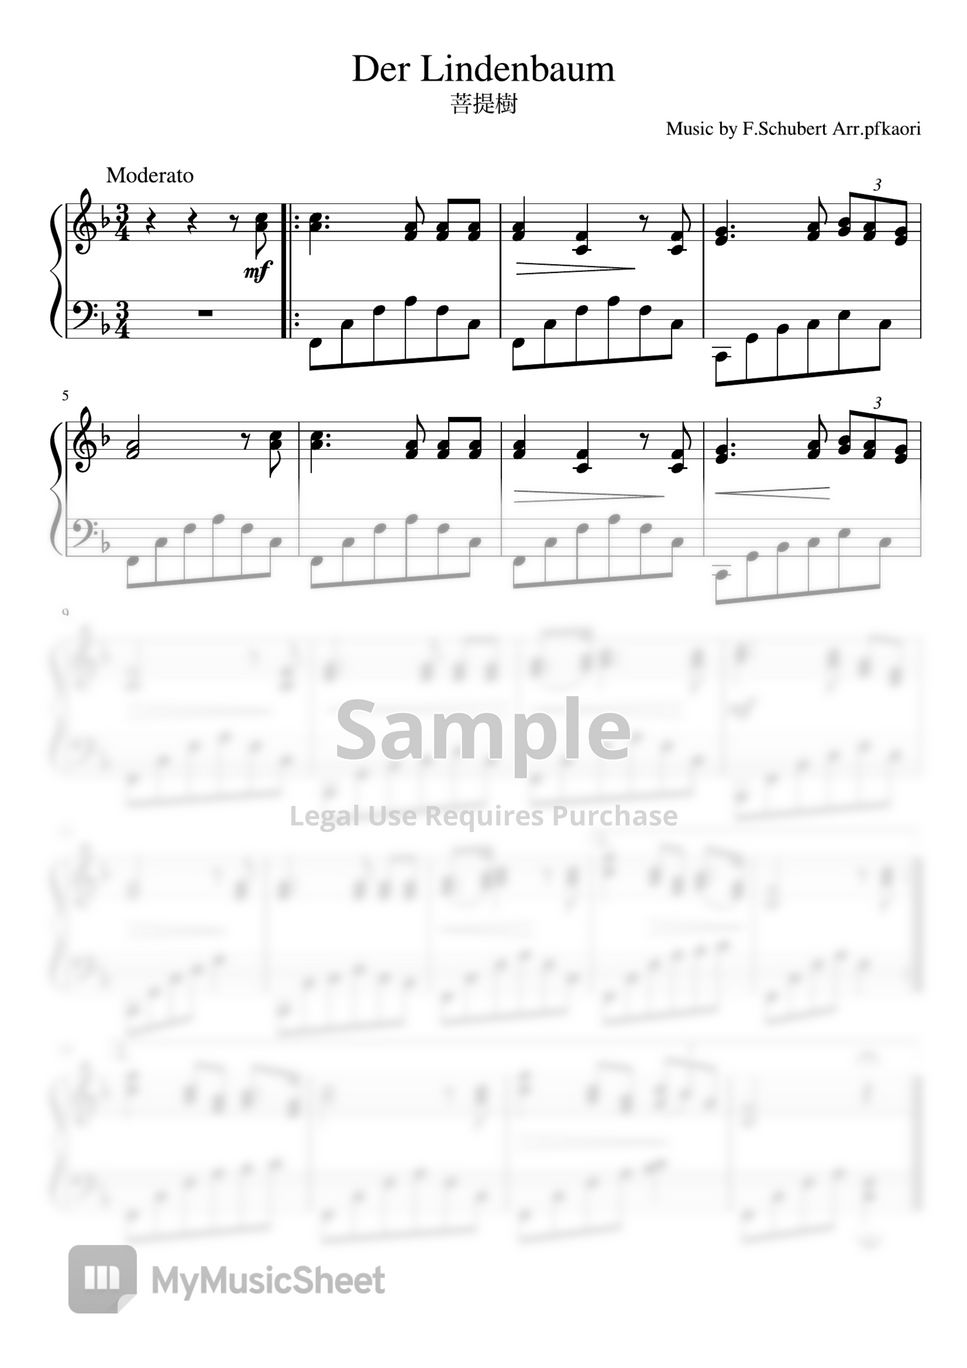 F.Schubert - Der Lindnbaum (Fdur/pianosolo/intermediate) by pfkaori